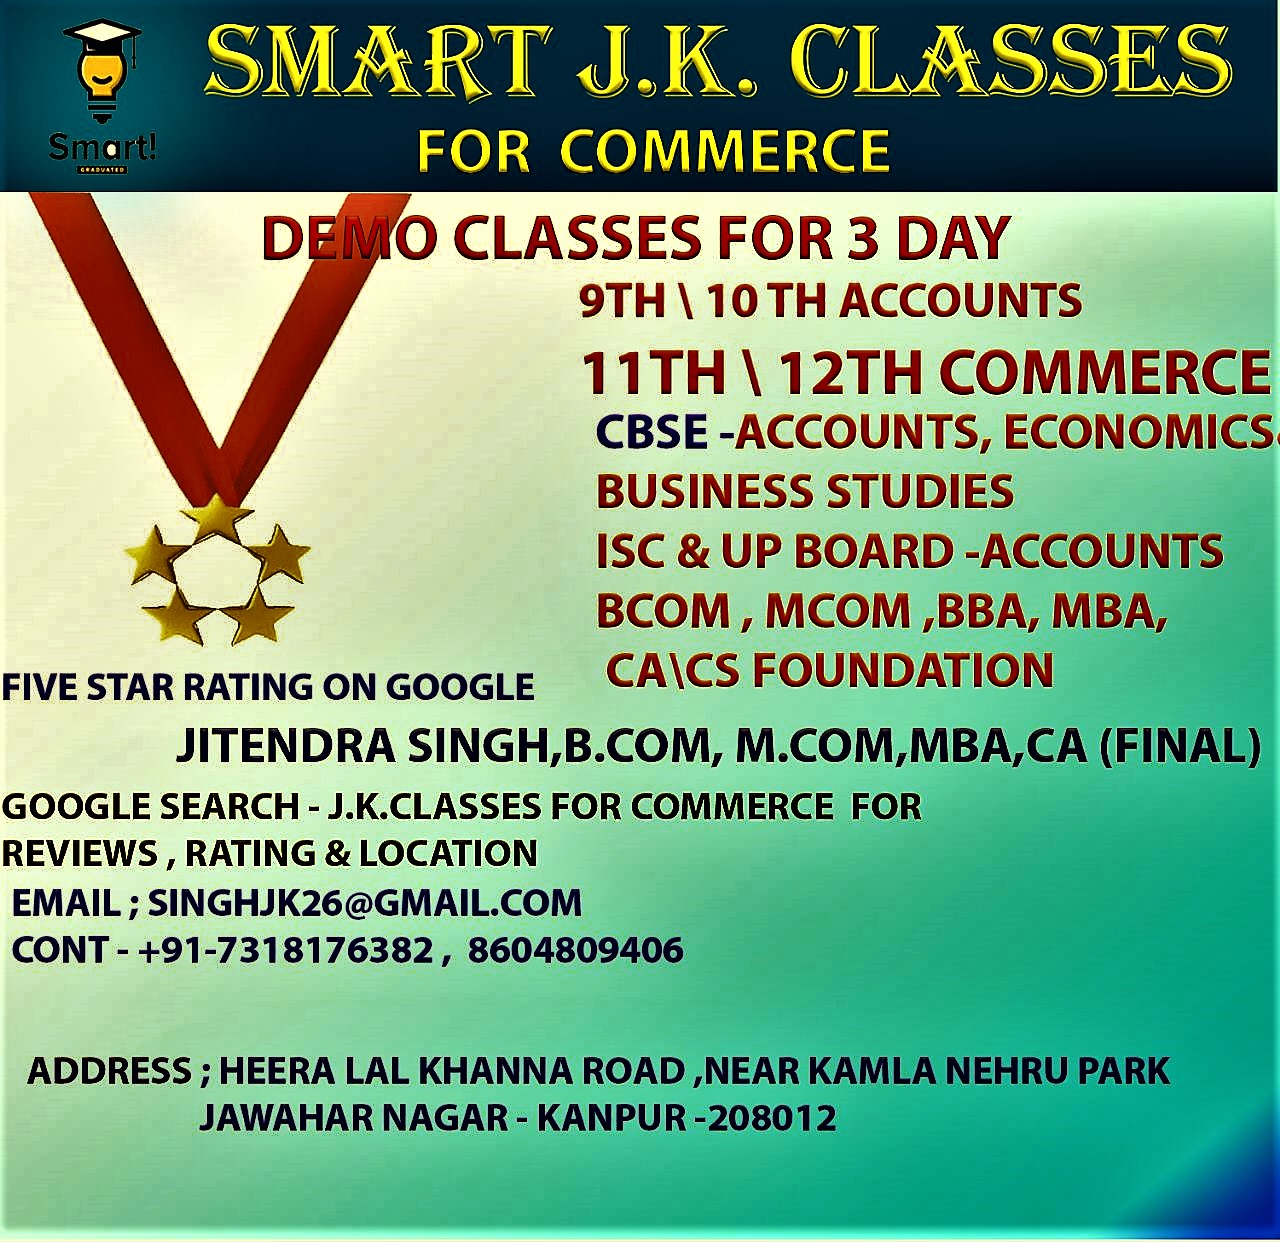 24094SMART JK CLASSES for COMMERCE
Class 11th – Business Studies